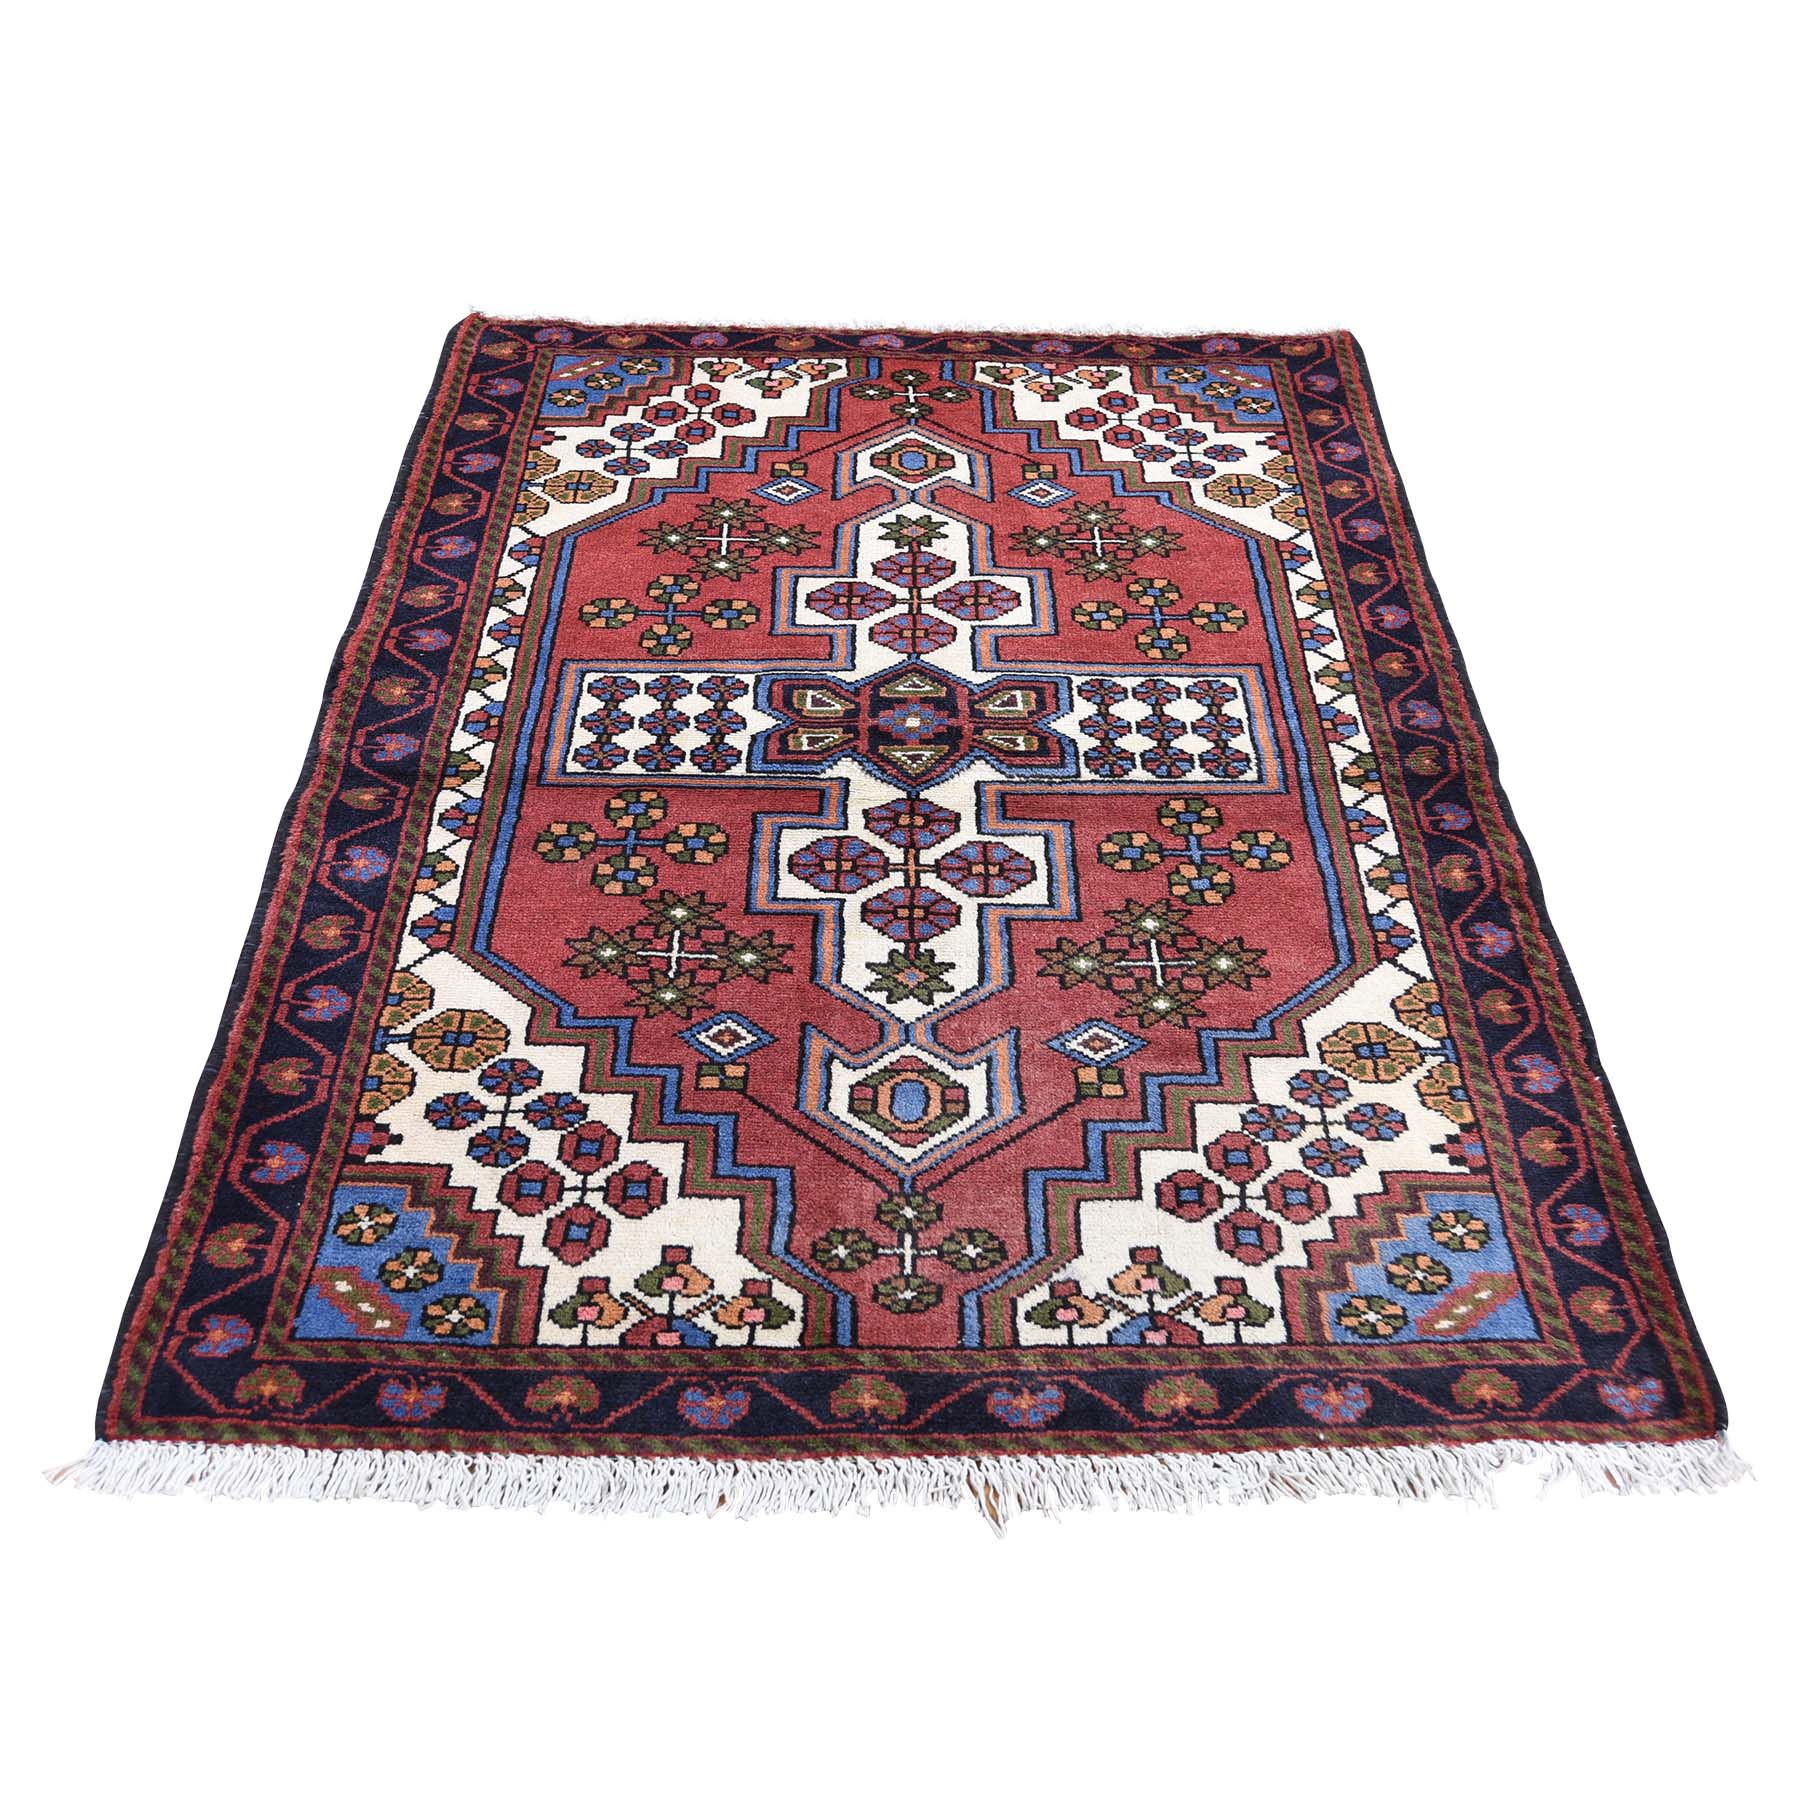 3'5"x5' Vintage Bohemian Red Persian Hamadan Pure Wool Hand Woven Oriental Rug 